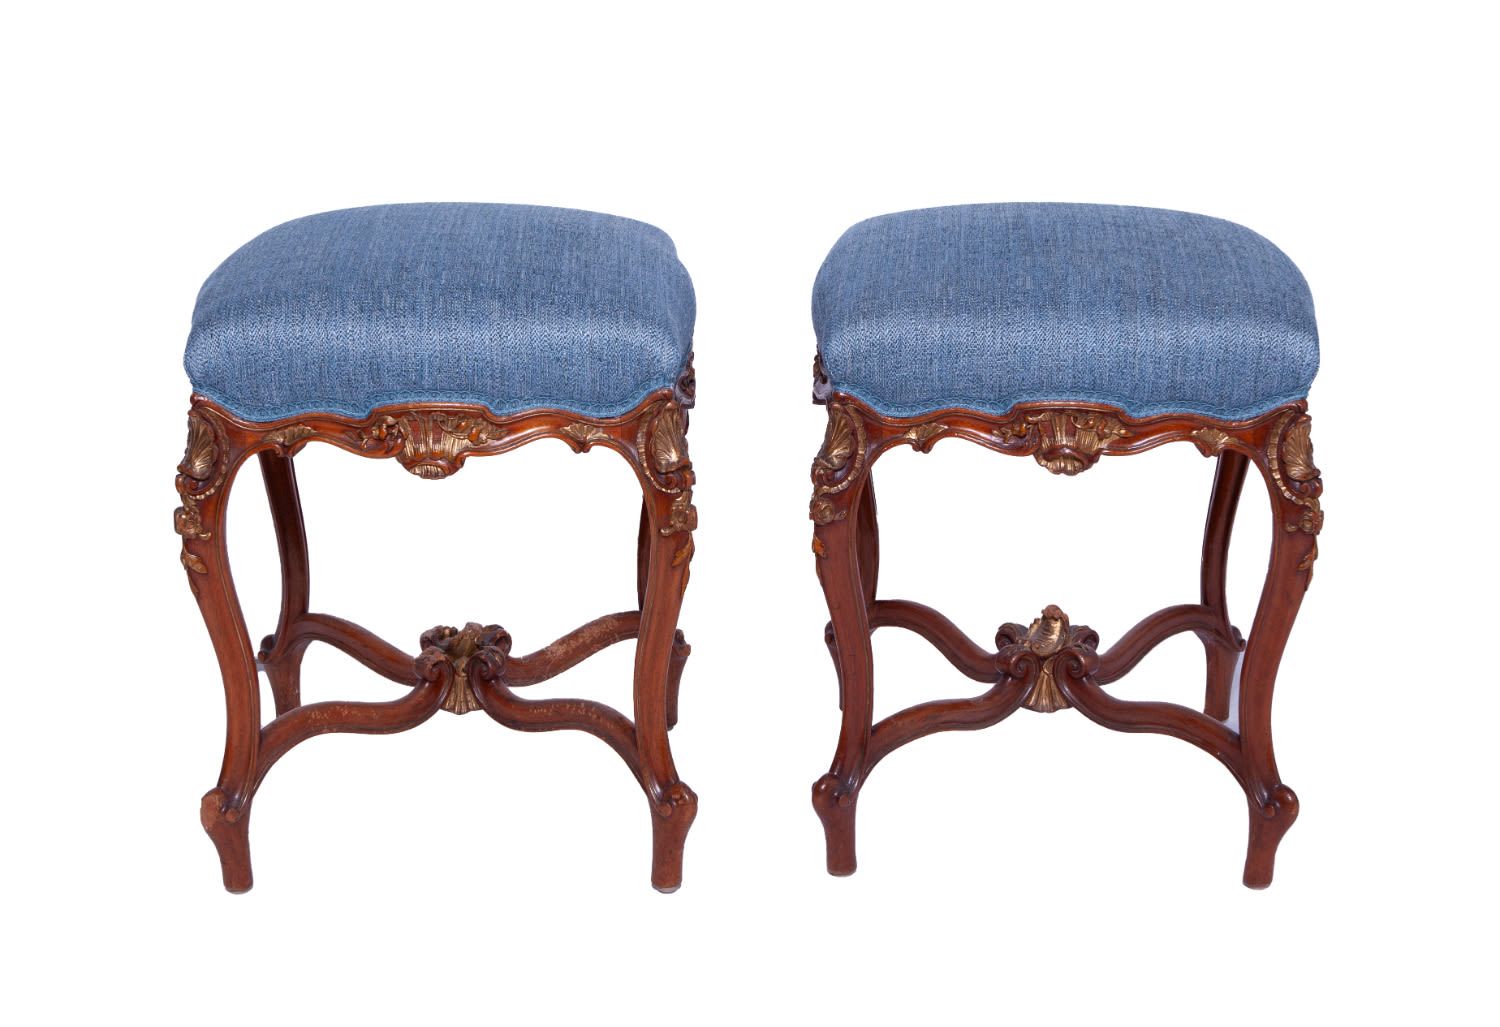 Pair of 19th Century Carved and Upholstered Stools 两张精美的重雕凳，凳腿和凳裙均有鎏金细节。
 

最近重新&hellip;